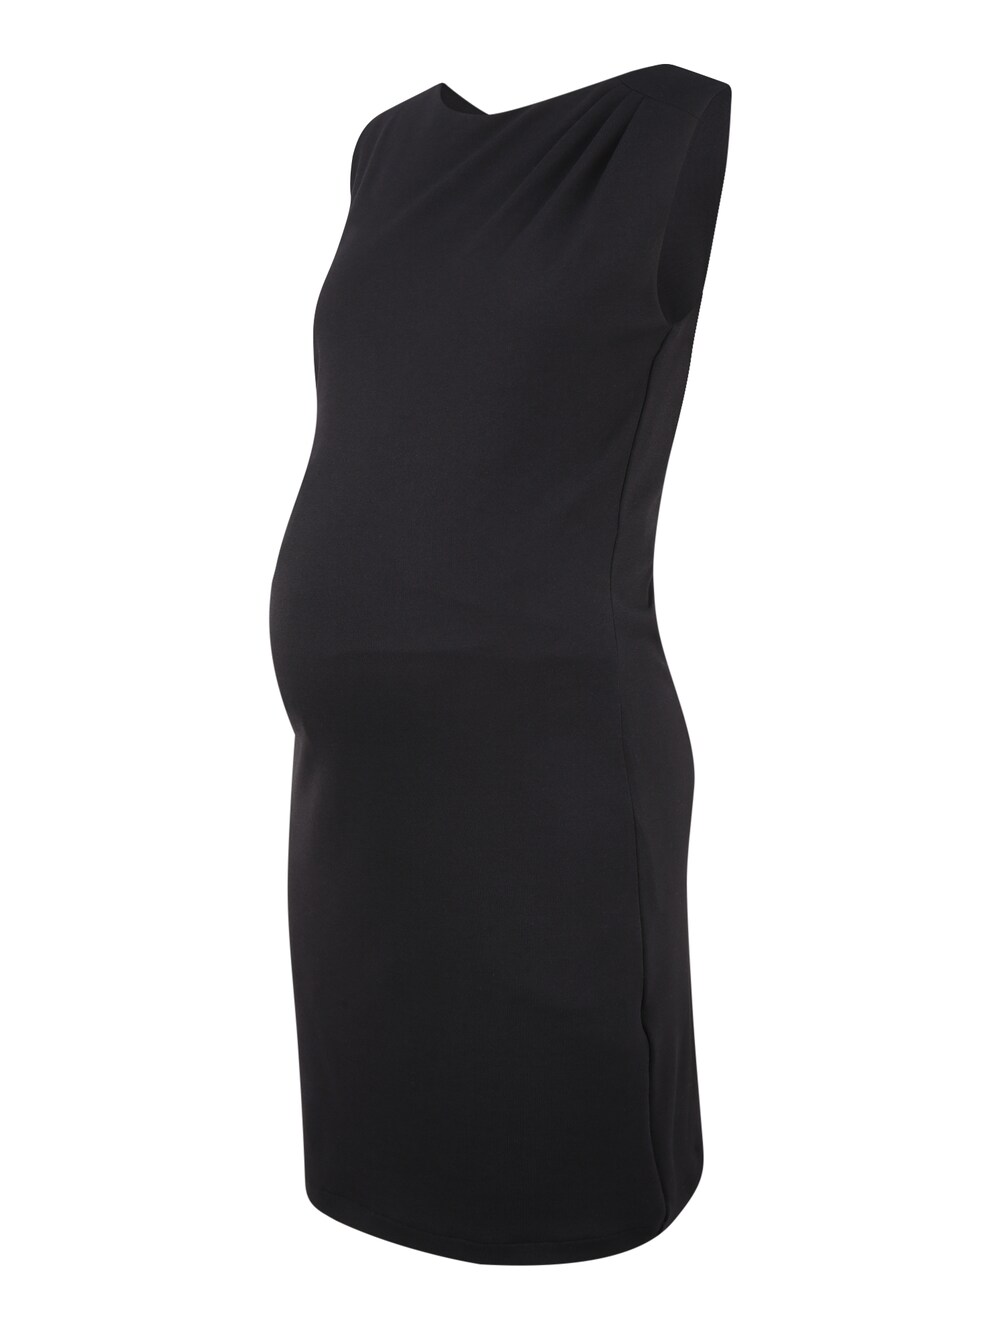 Платье Bebefield Grazia, черный платье maria grazia severi 48y4282059